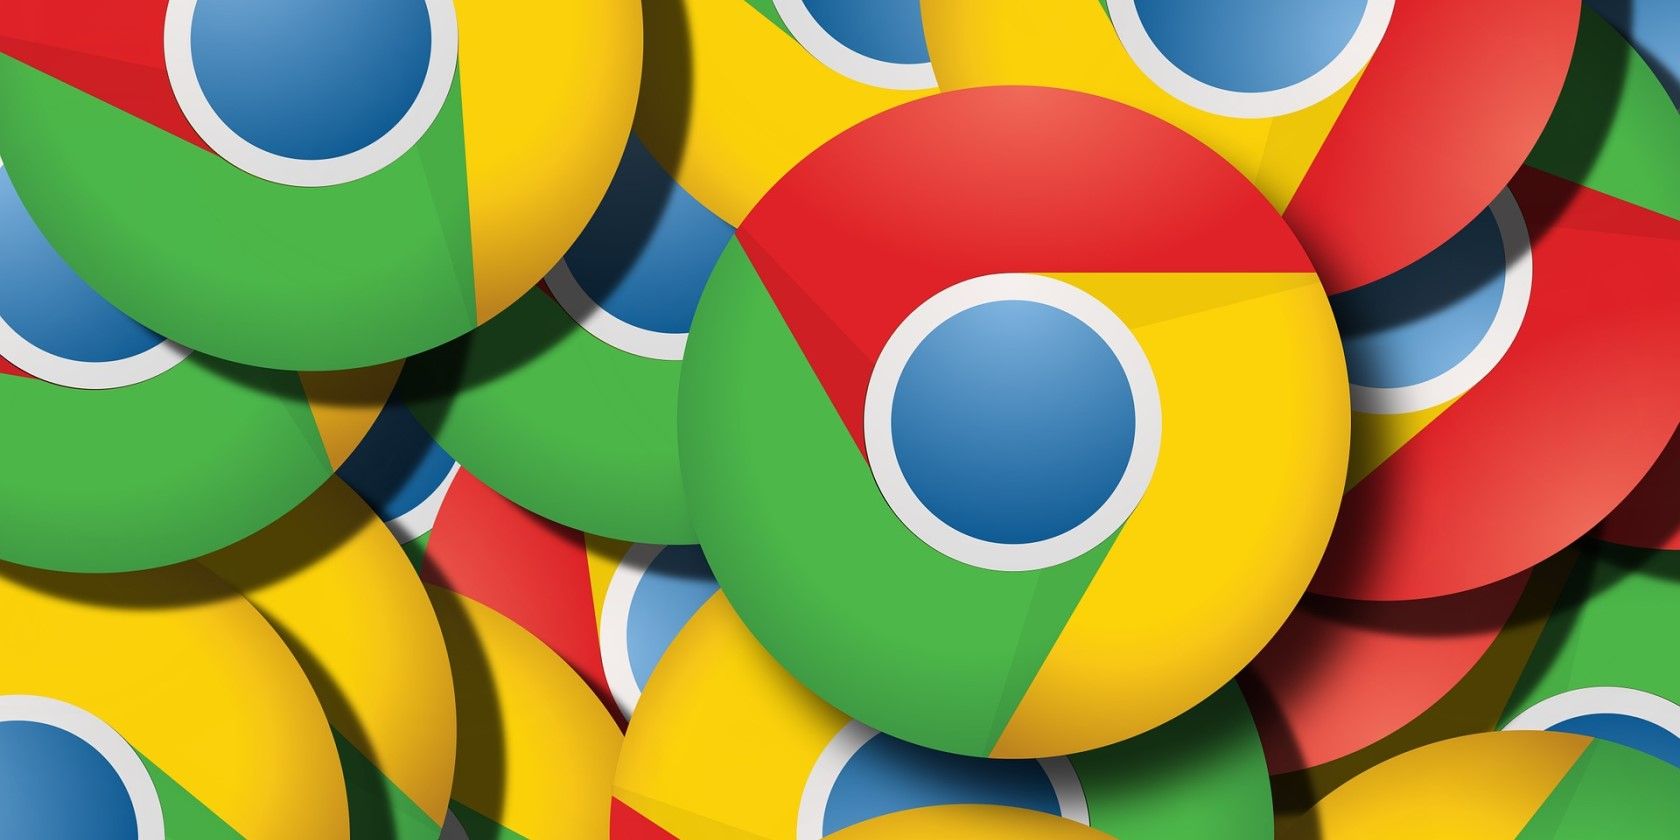 A jumble of Google Chrome icons